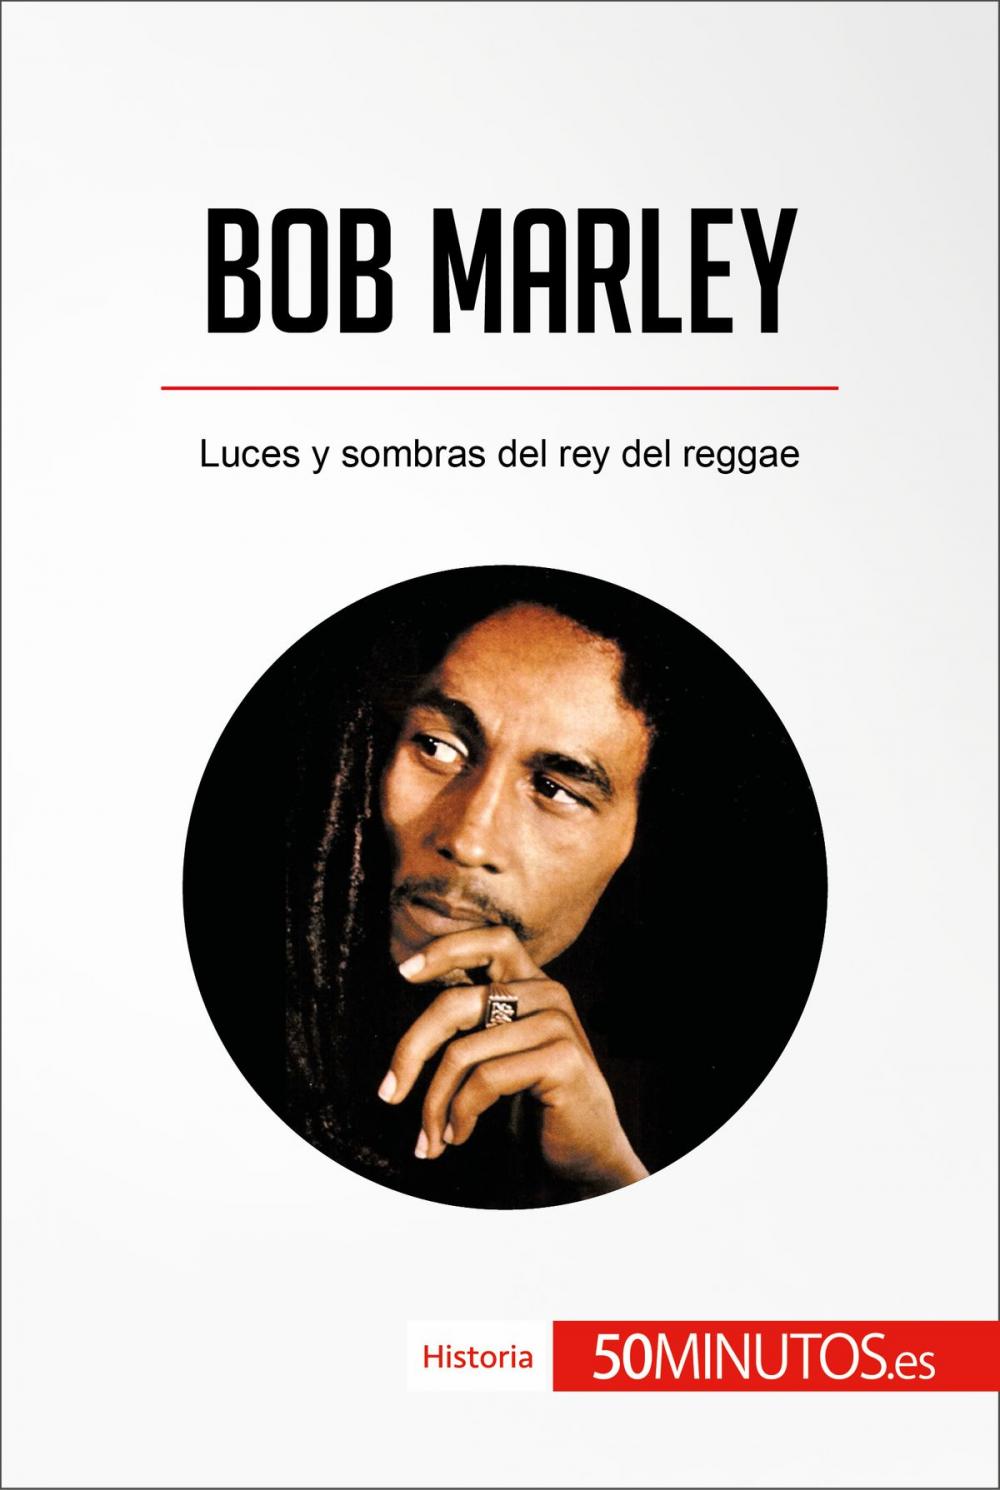 Big bigCover of Bob Marley